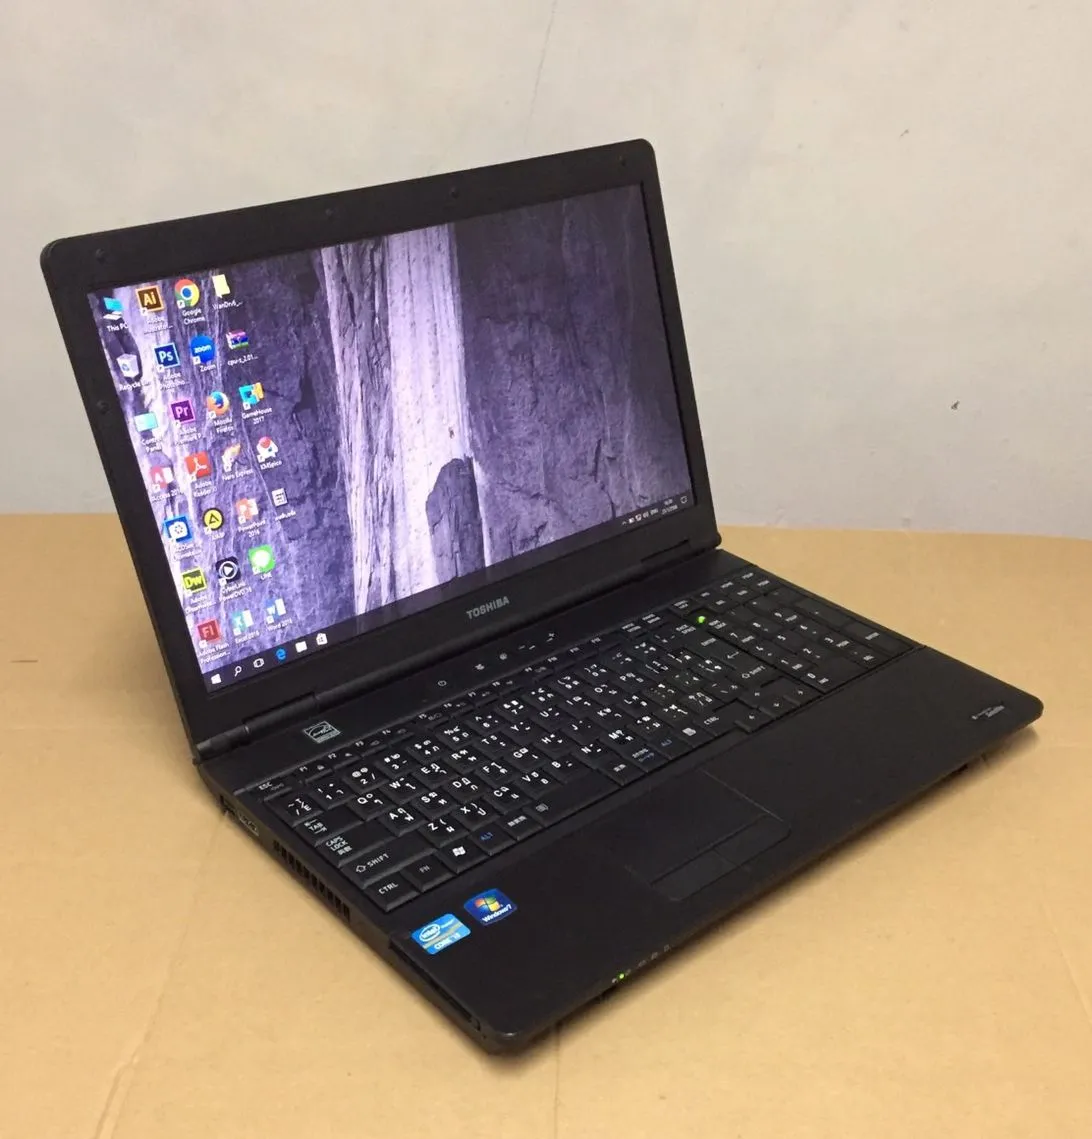 PC/タブレット ノートPC โน๊ตบุ๊คมือสอง Notebook TOSHIBA B551/E Core i3-2350M(RAM:4GB/HDD:160GB)  ขนาด 15.6นิ้ว